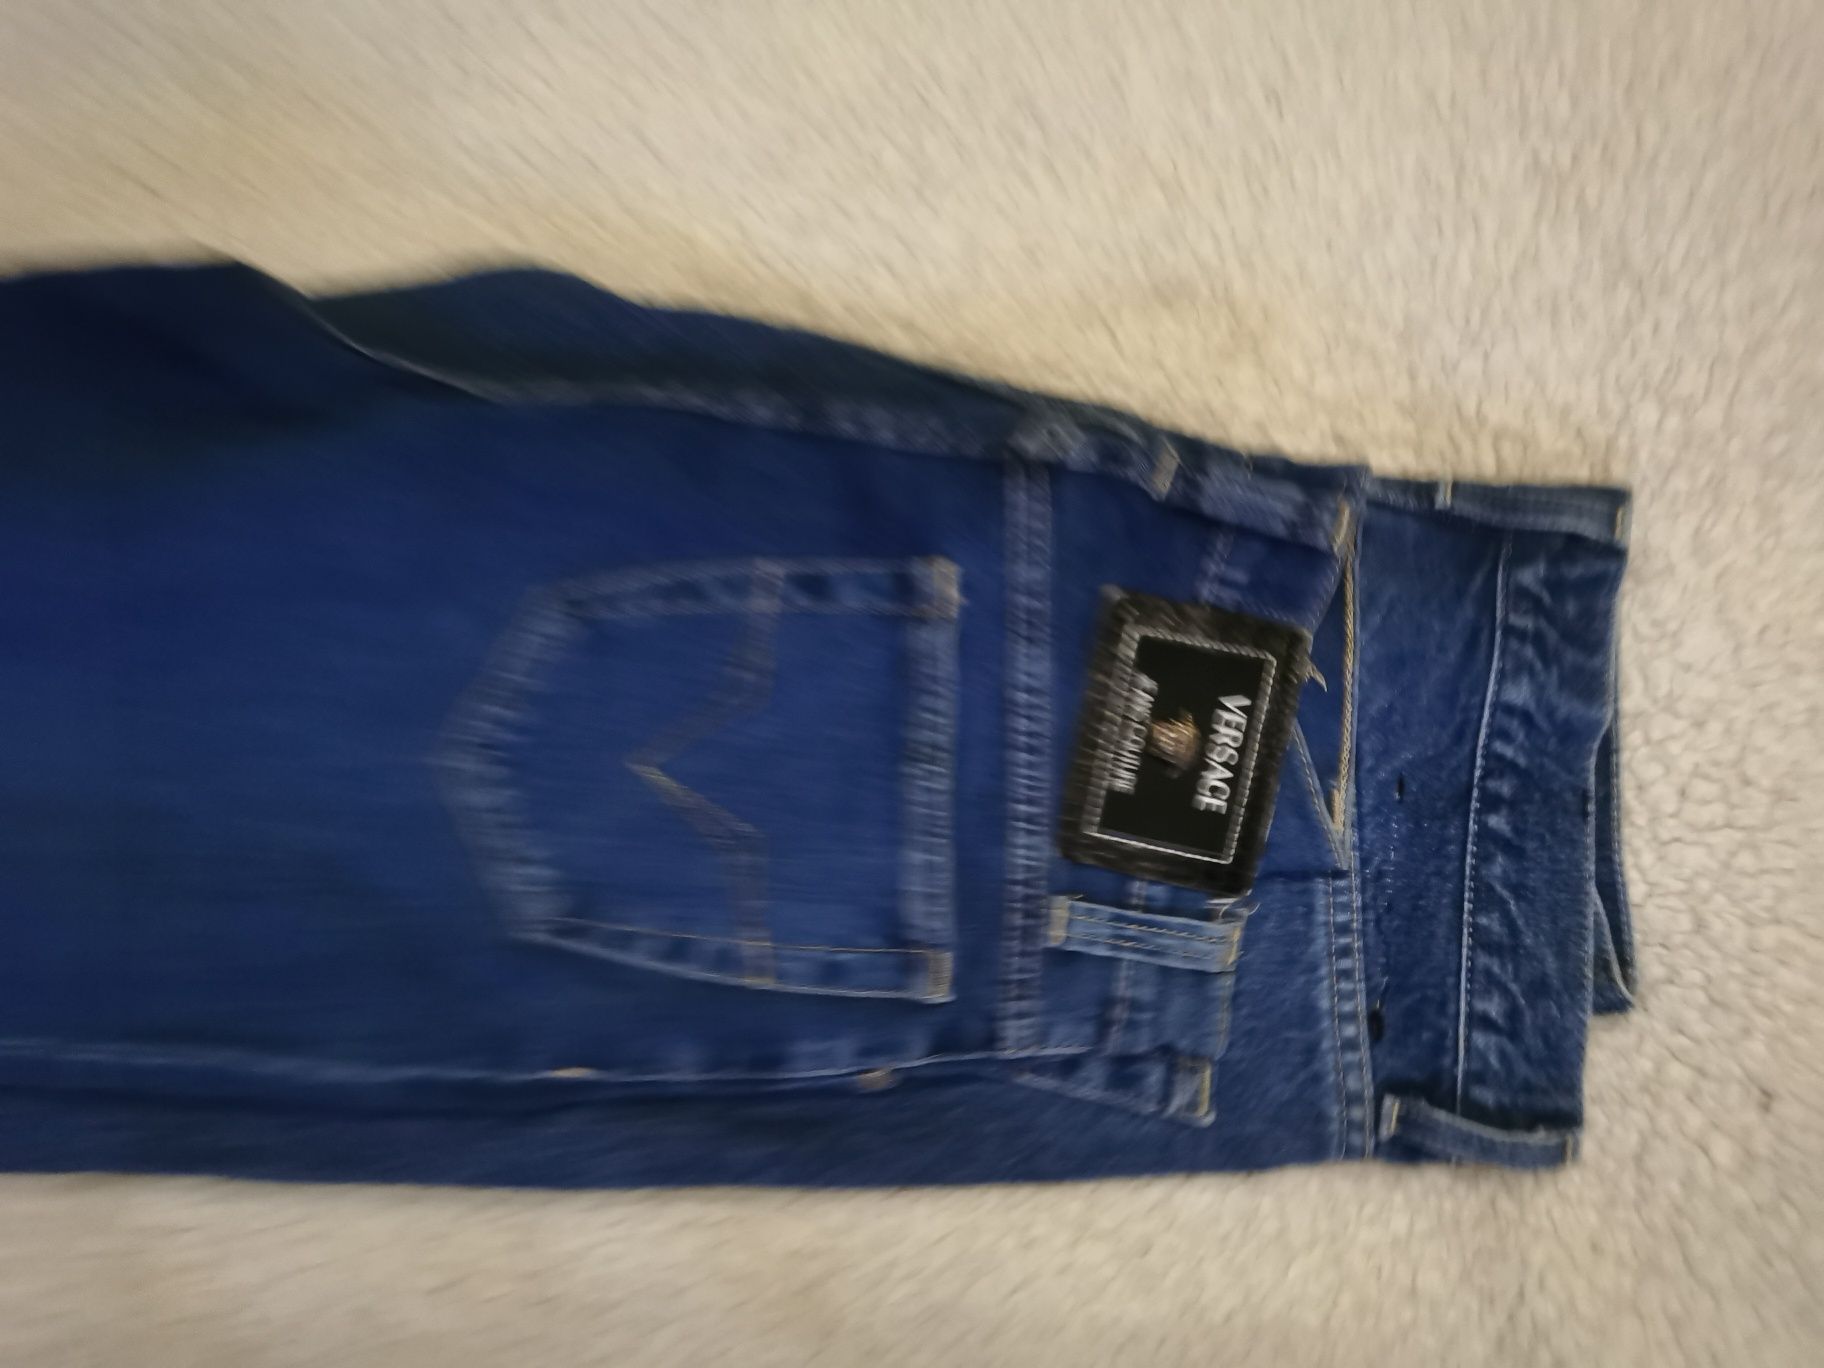 Spodnie jeans Unisex firmy Versace oryginalne